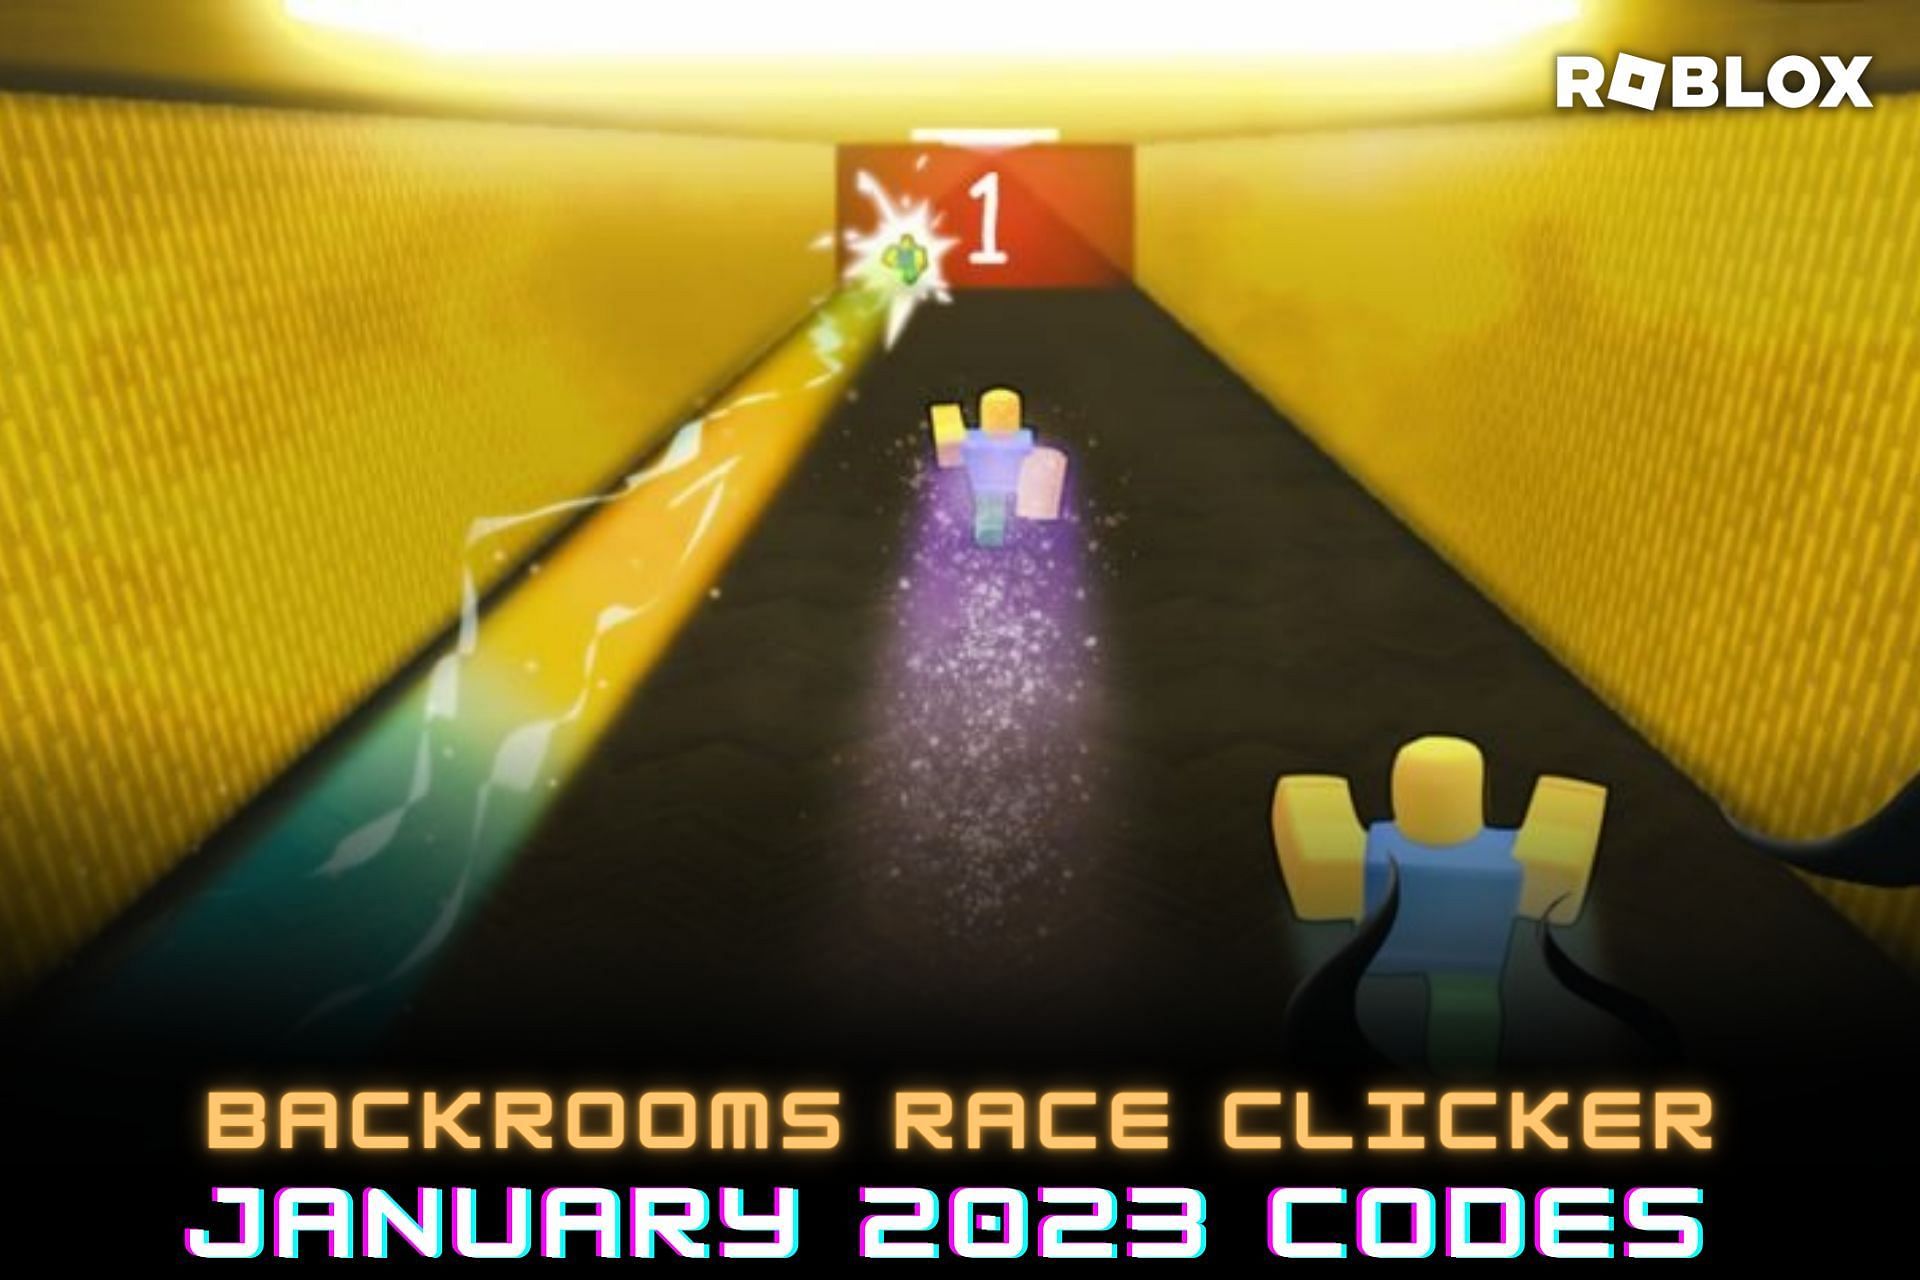 Speed Race Clicker codes